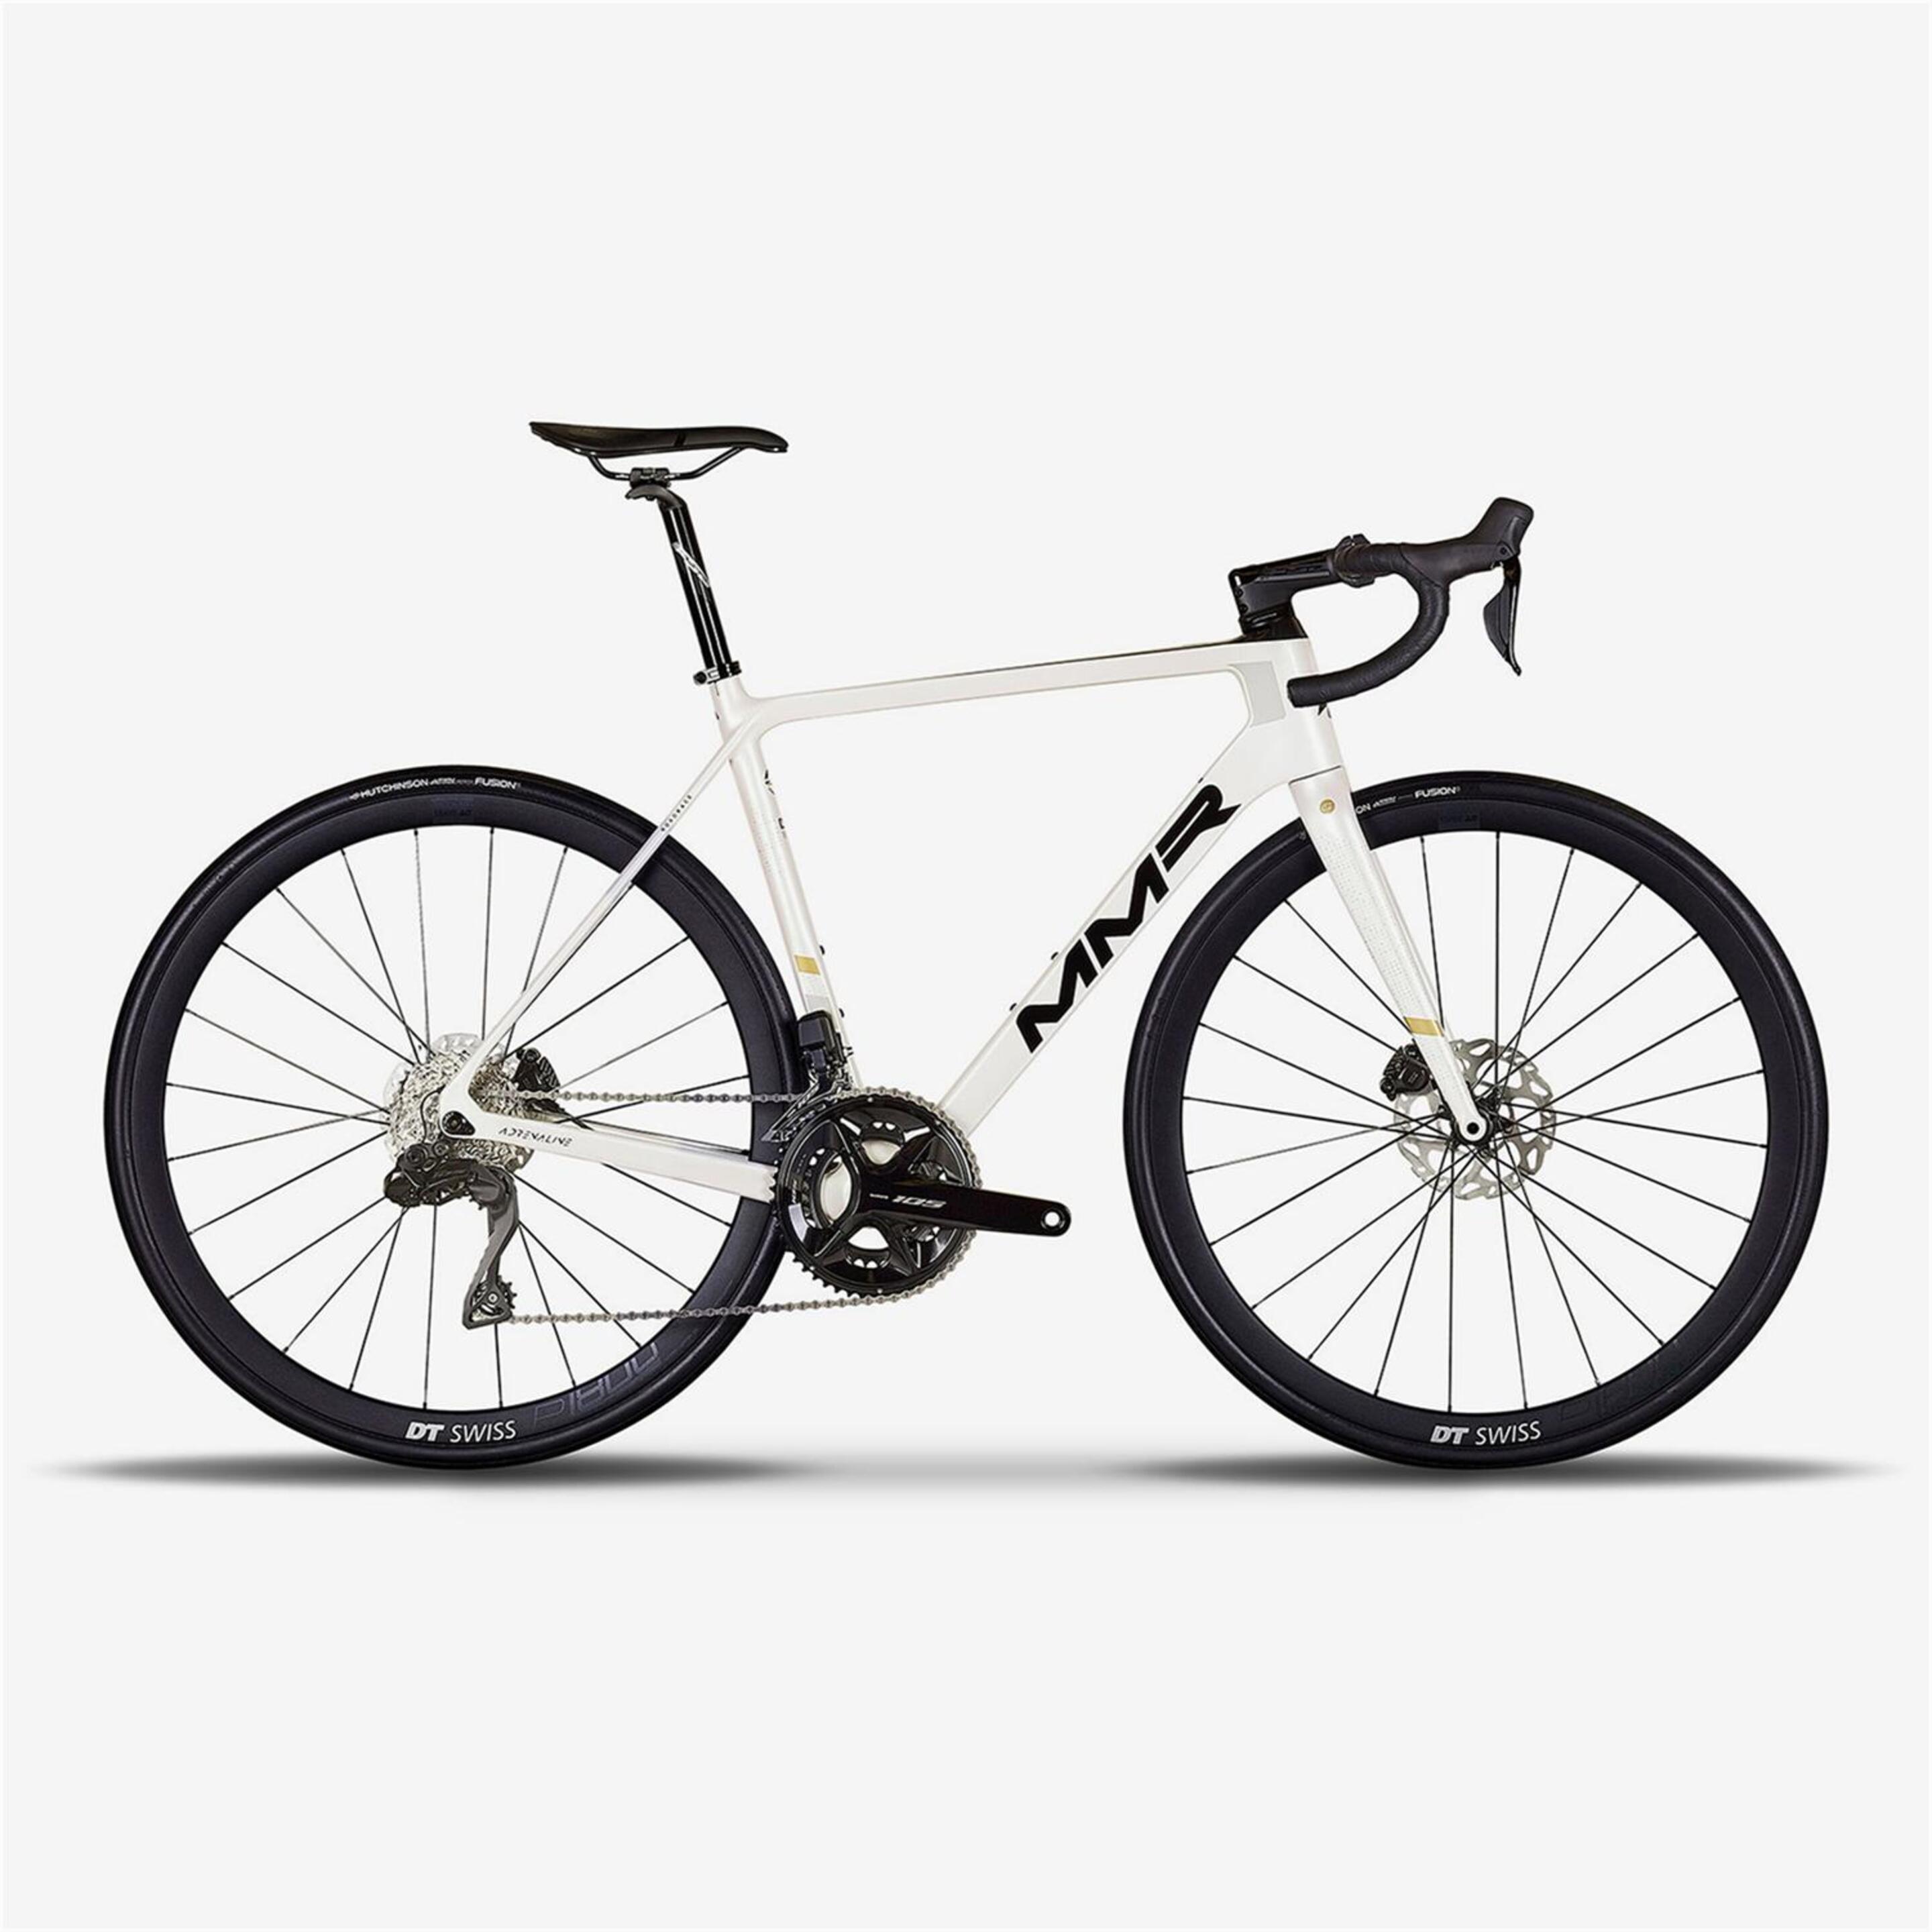 MMR Adrenaline 50 - blanco - Bicicleta Estrada